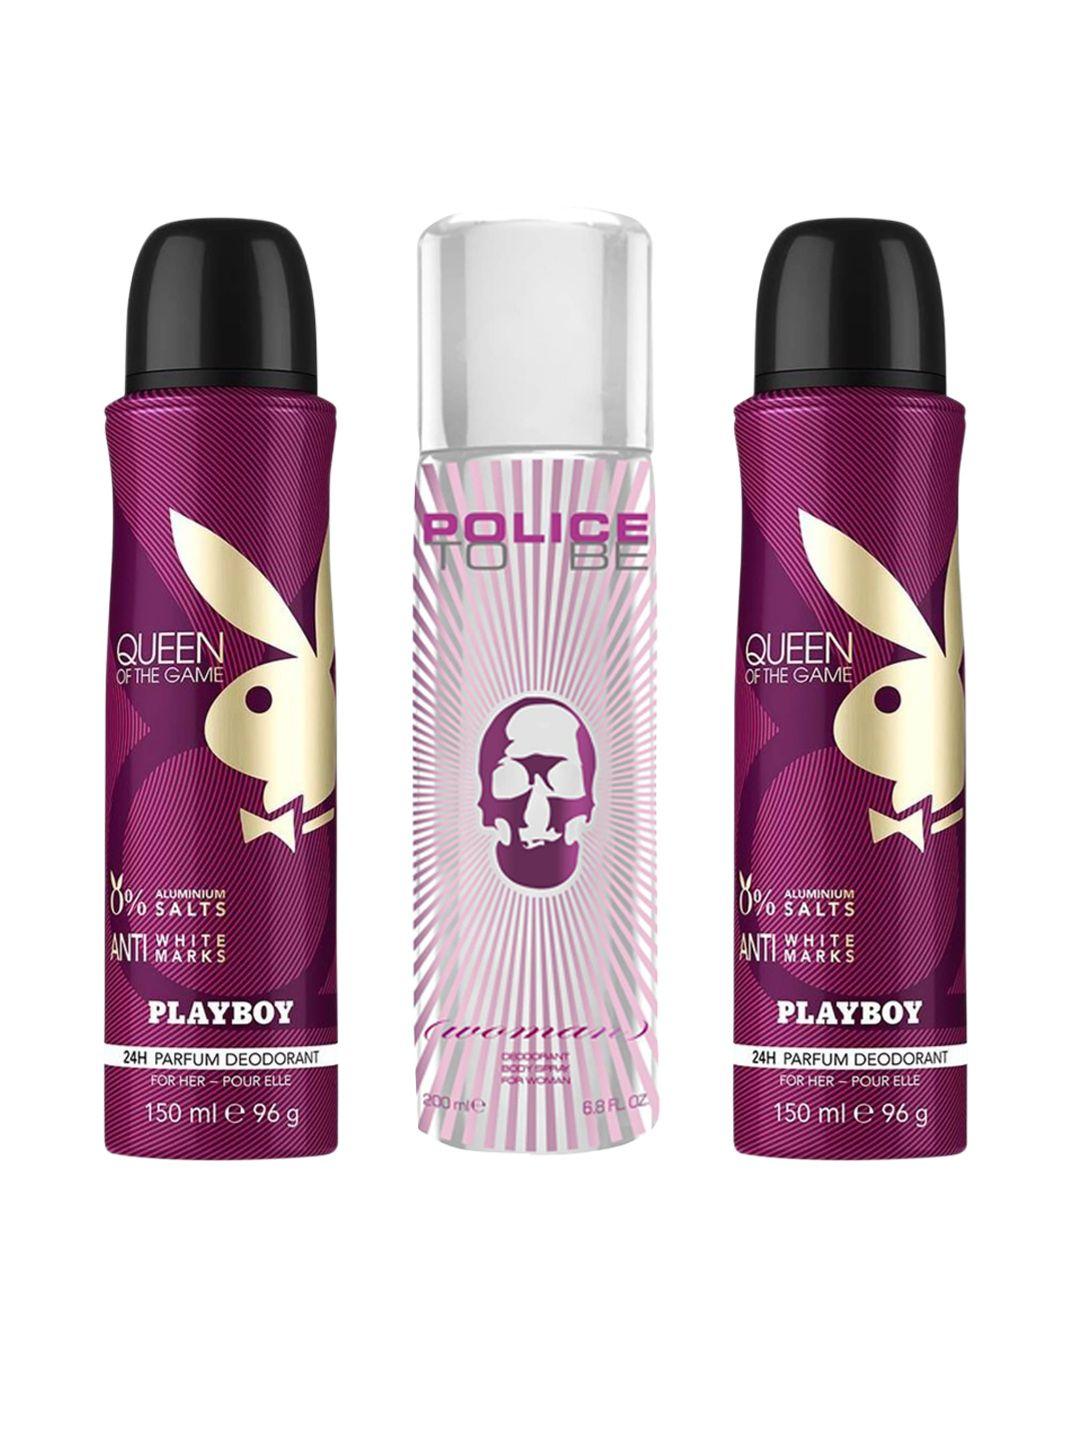 playboy set of 3 parfum deodorants - queen of the game & police to be 500 ml